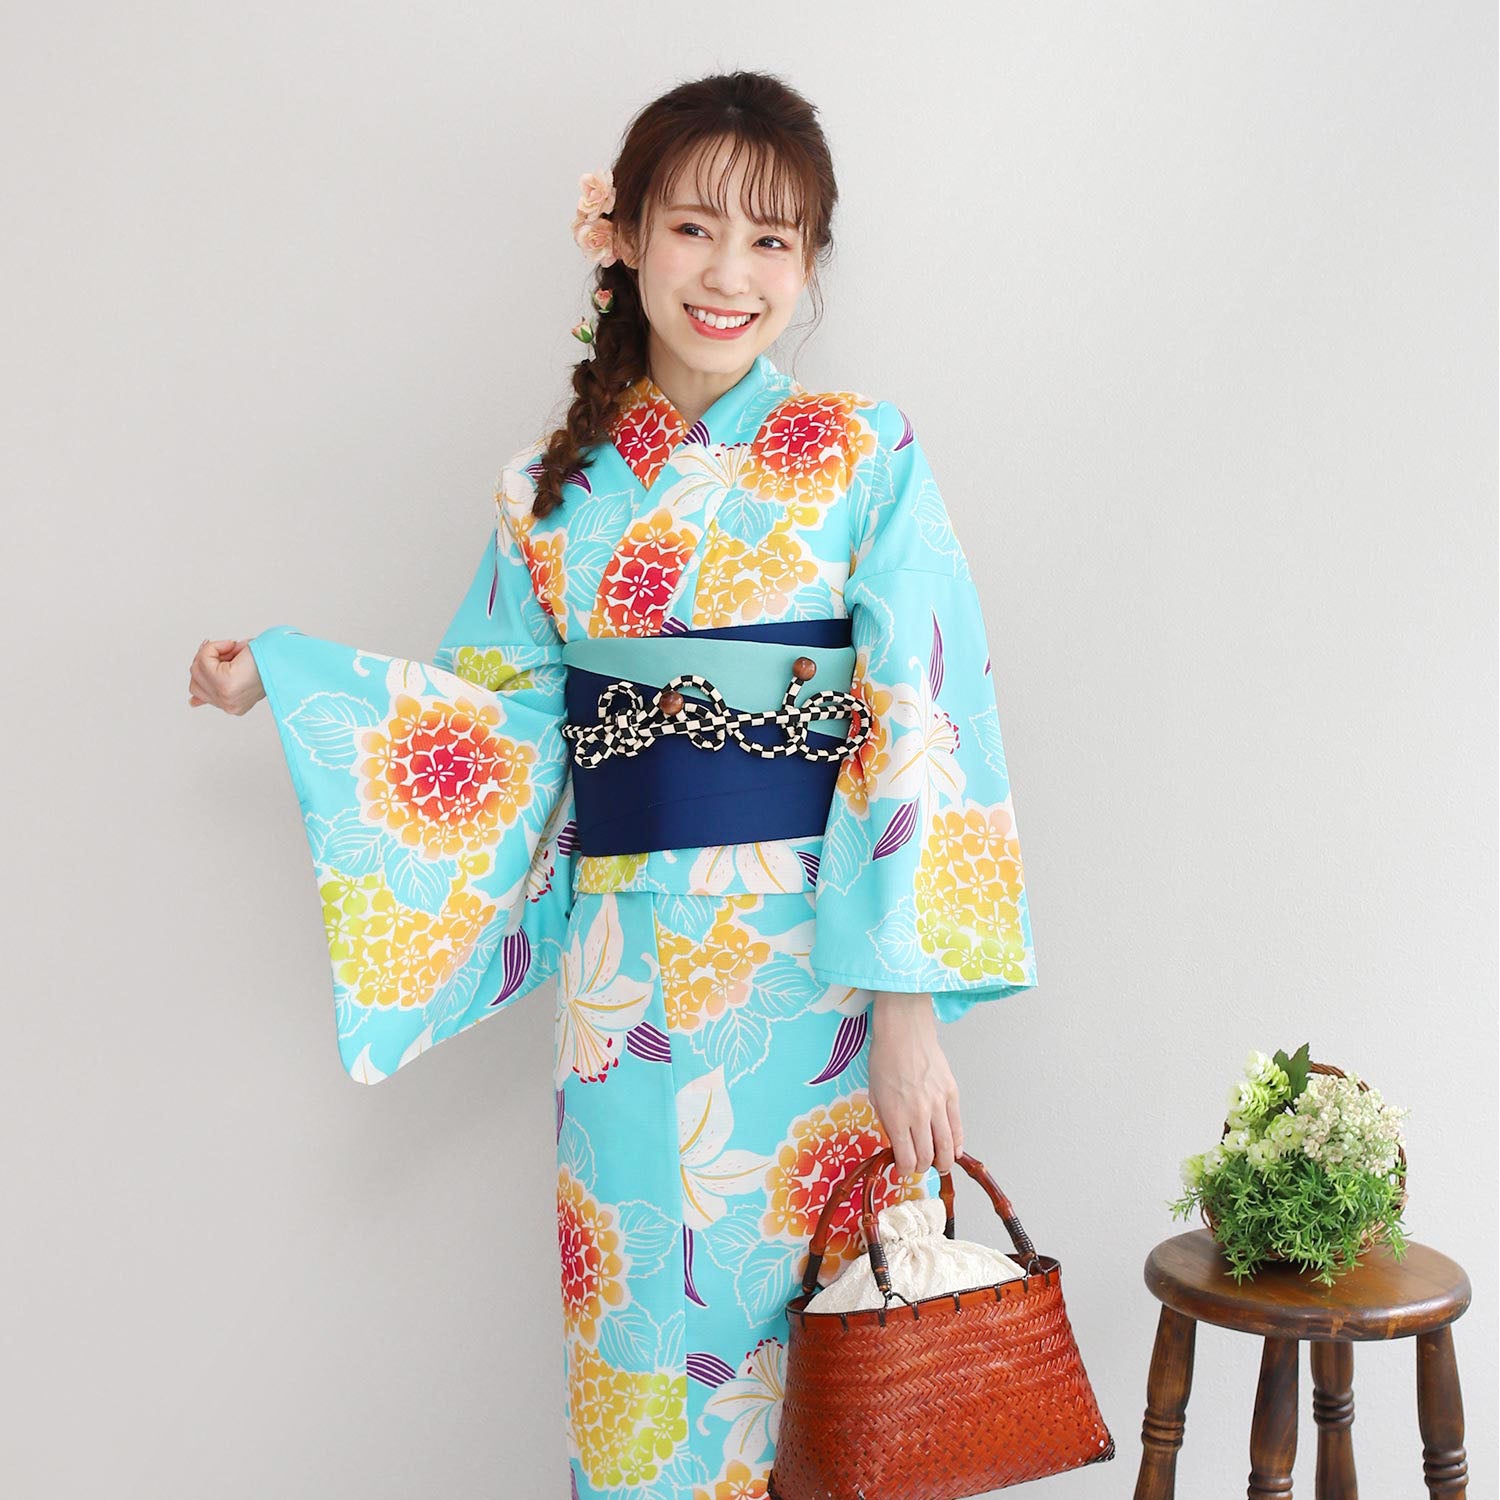 Kawari 編織浴衣和腰帶套裝繡球花和百合花淺藍色 x 橙色 [x81]